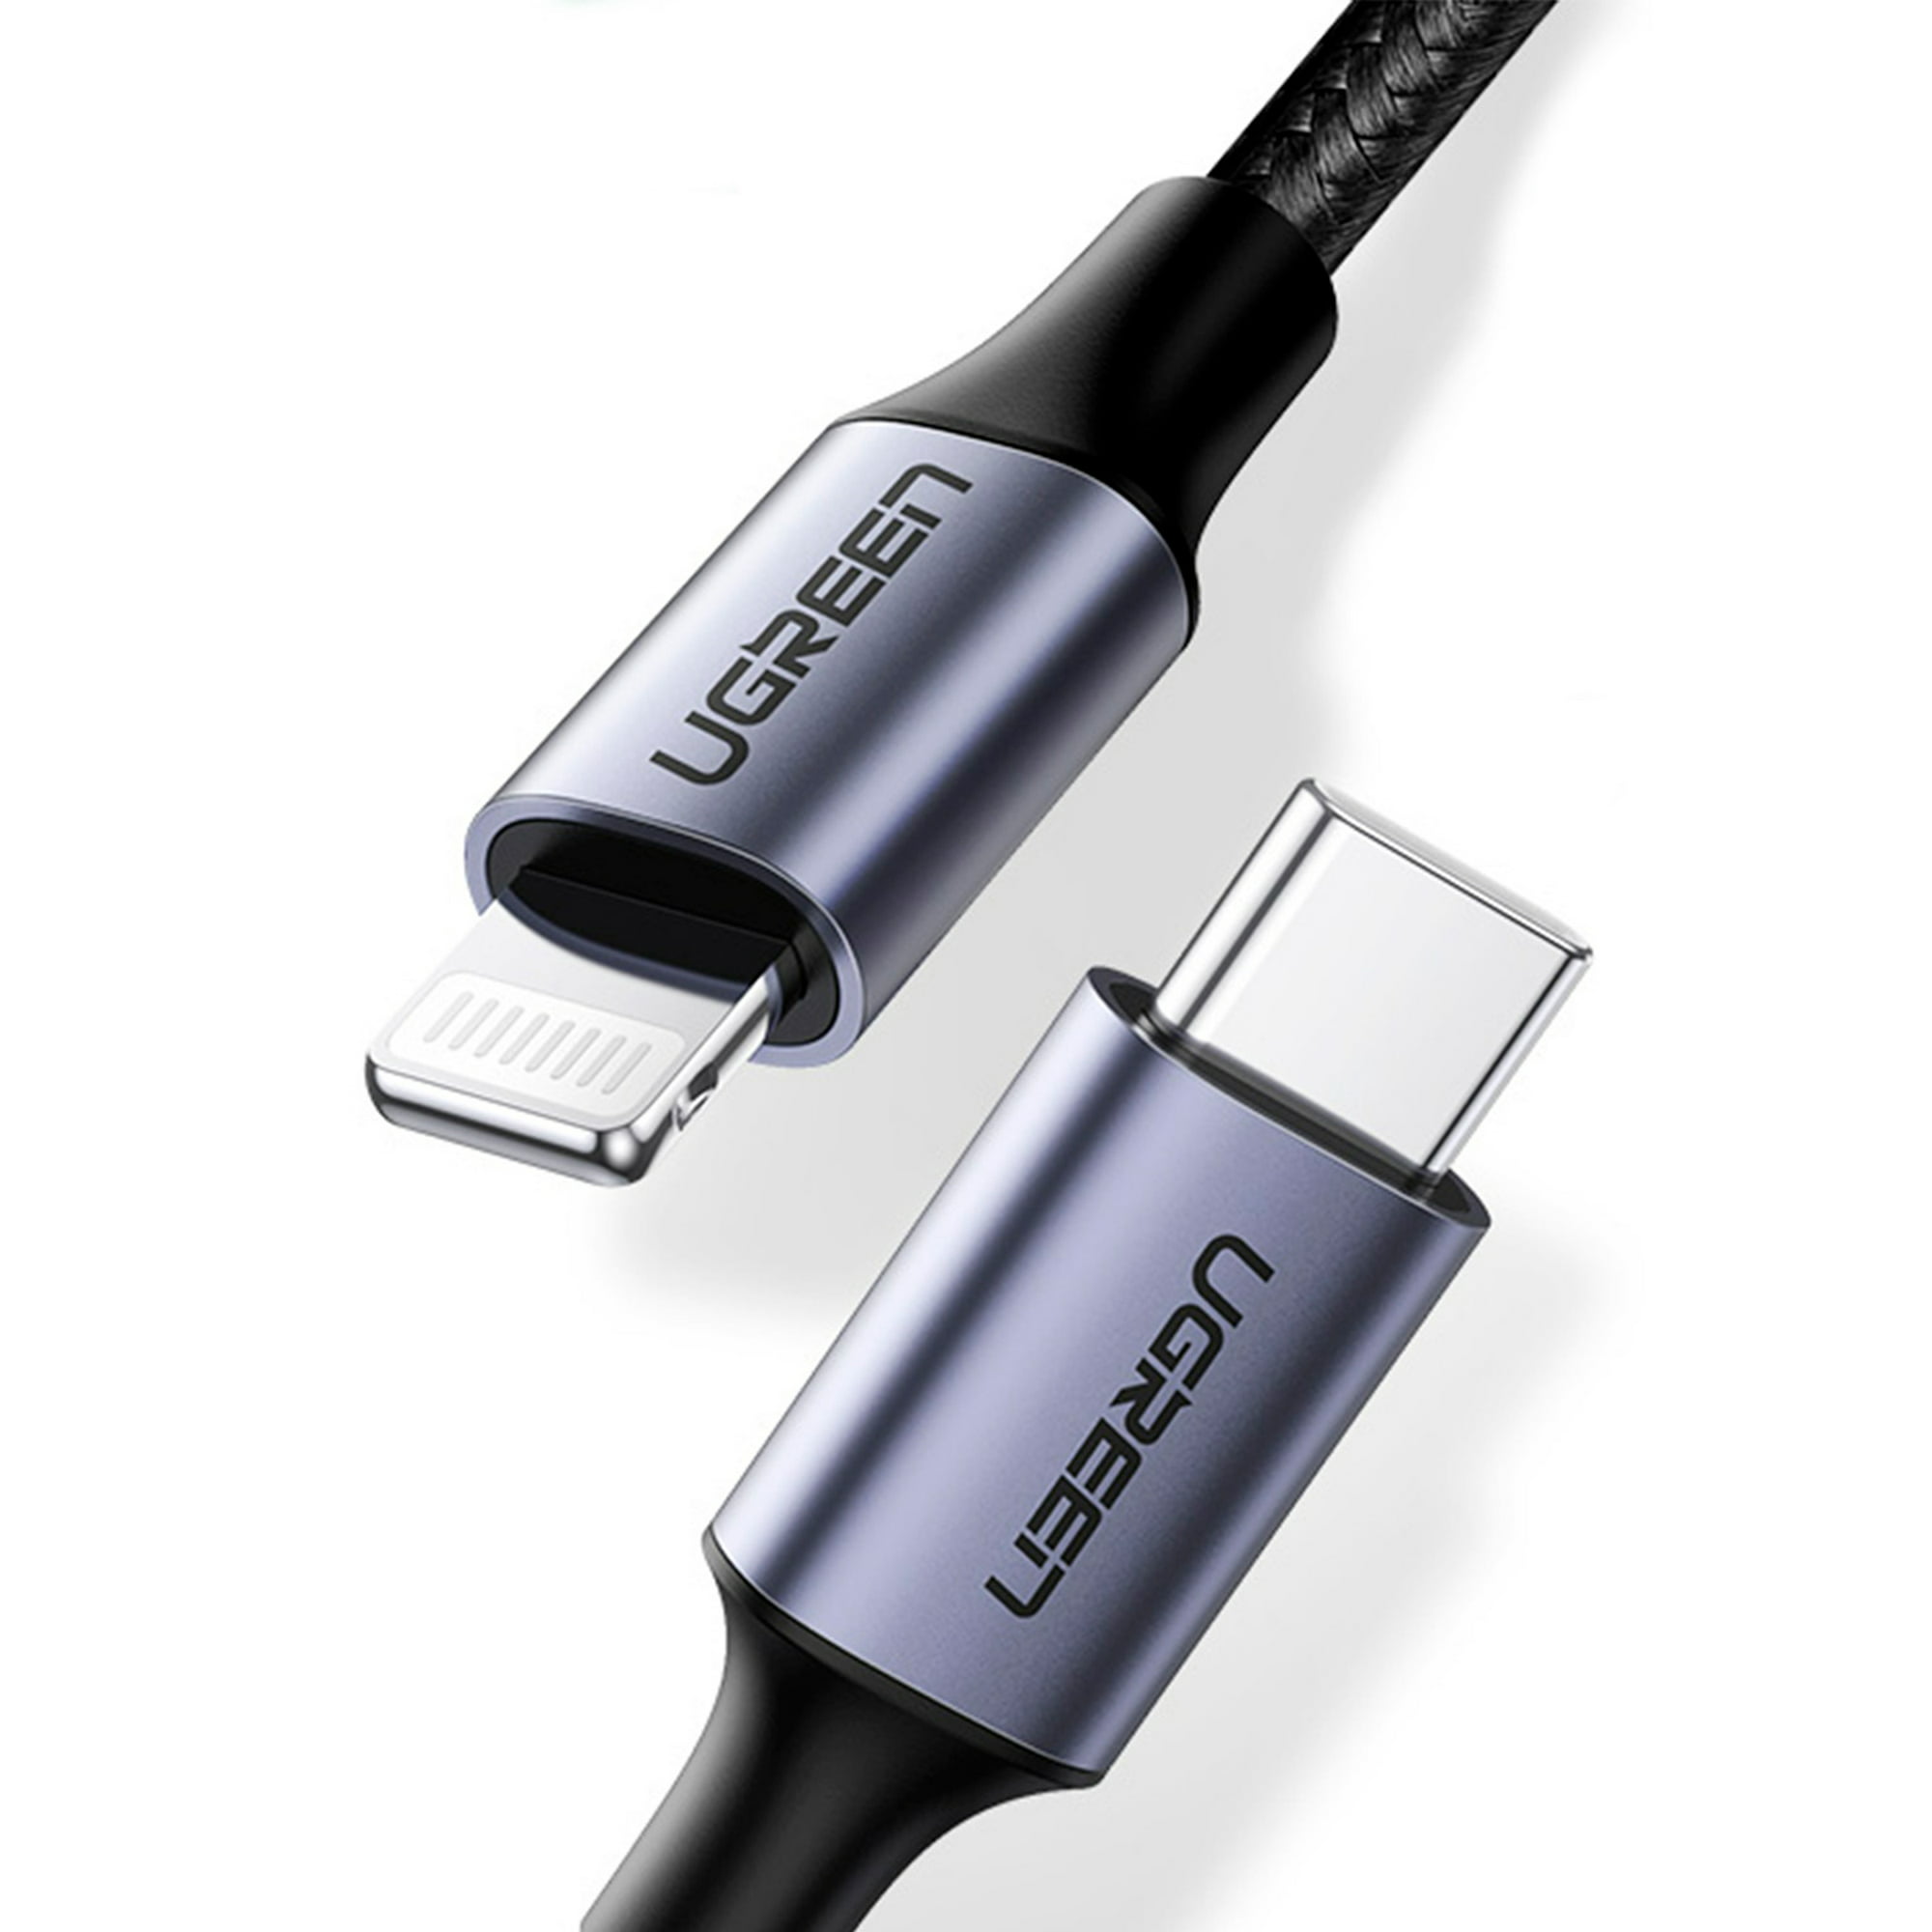 iPhone-iPad 20 Cm Cable Corto Carga Rapida Idenmex Cable mcdodo resistente  de alta tecnologia